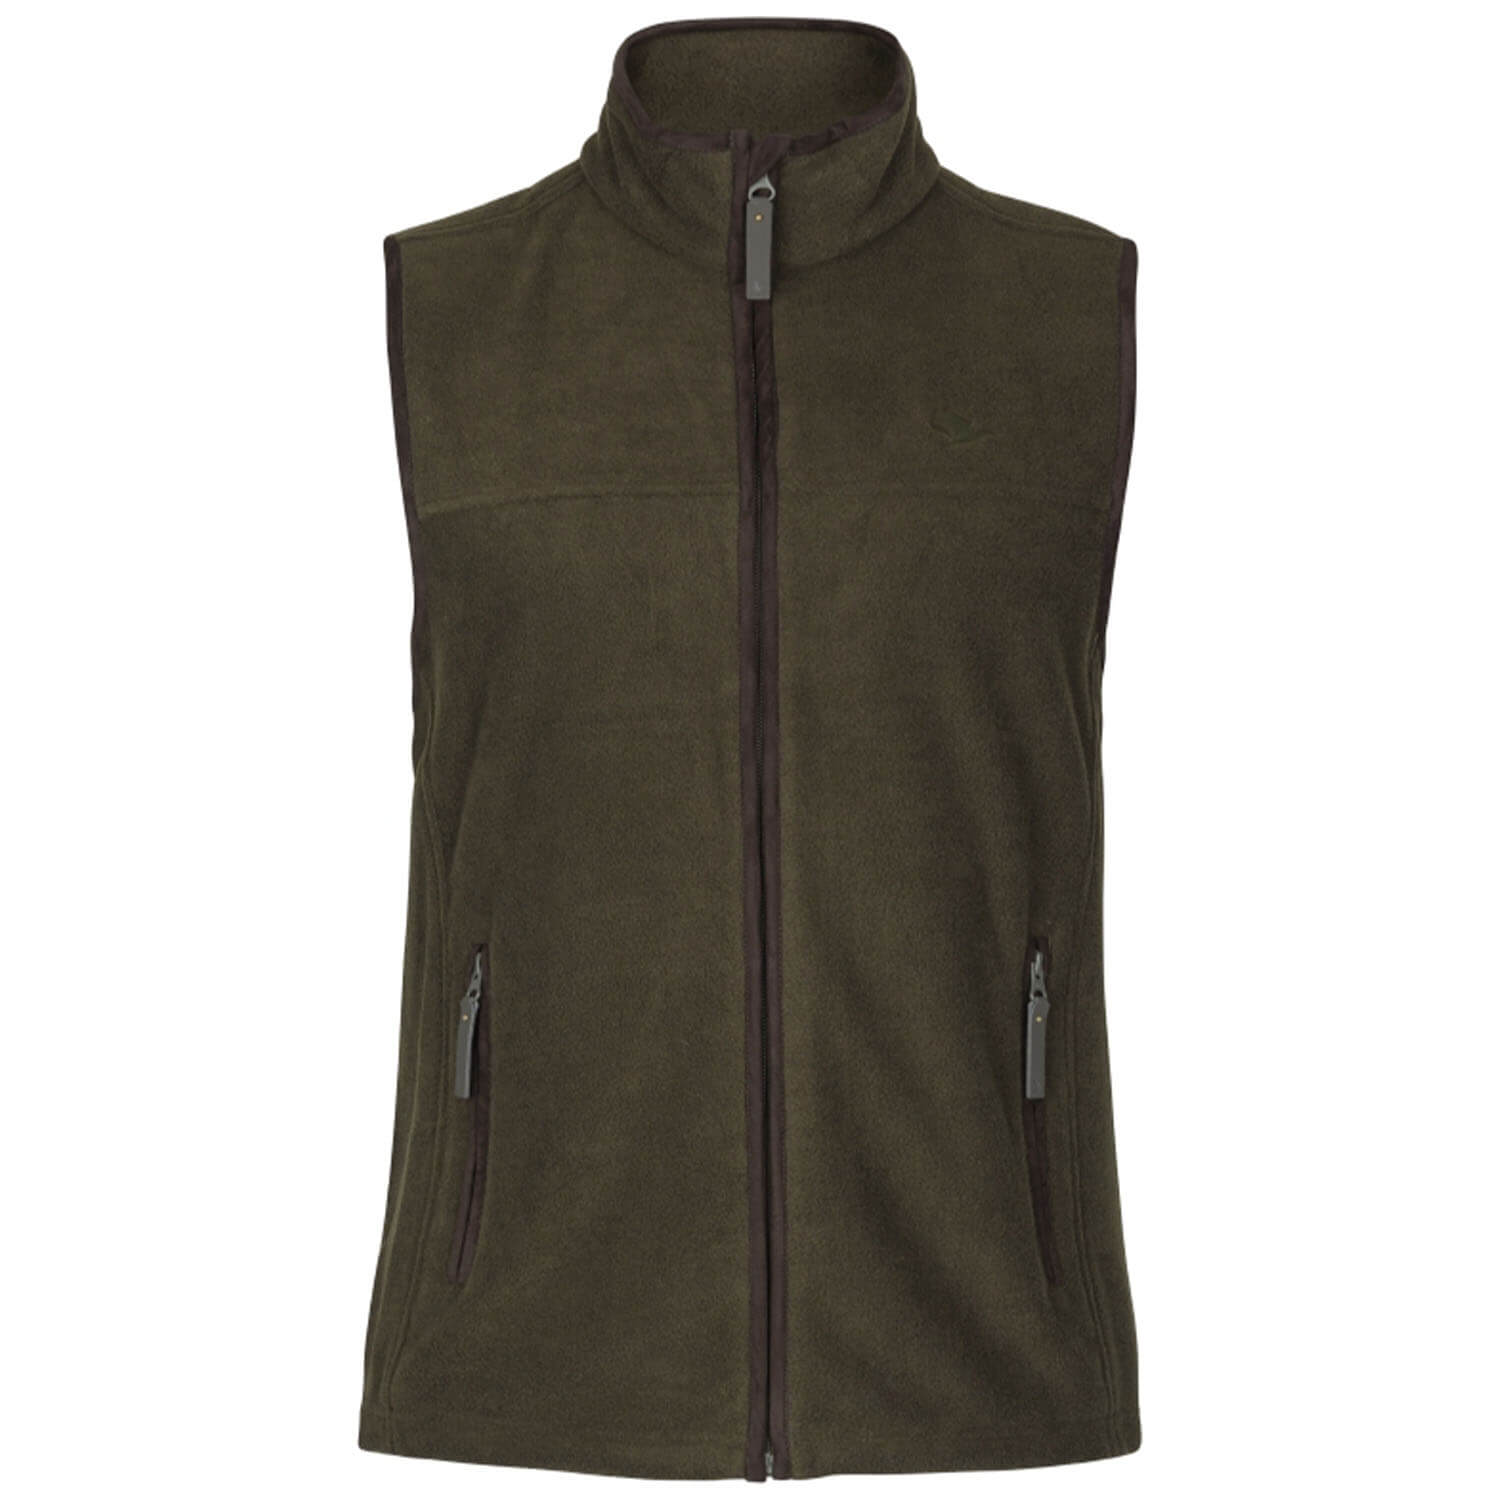  Seeland Woodcock Earl fleece vest (Pine Green Melange)